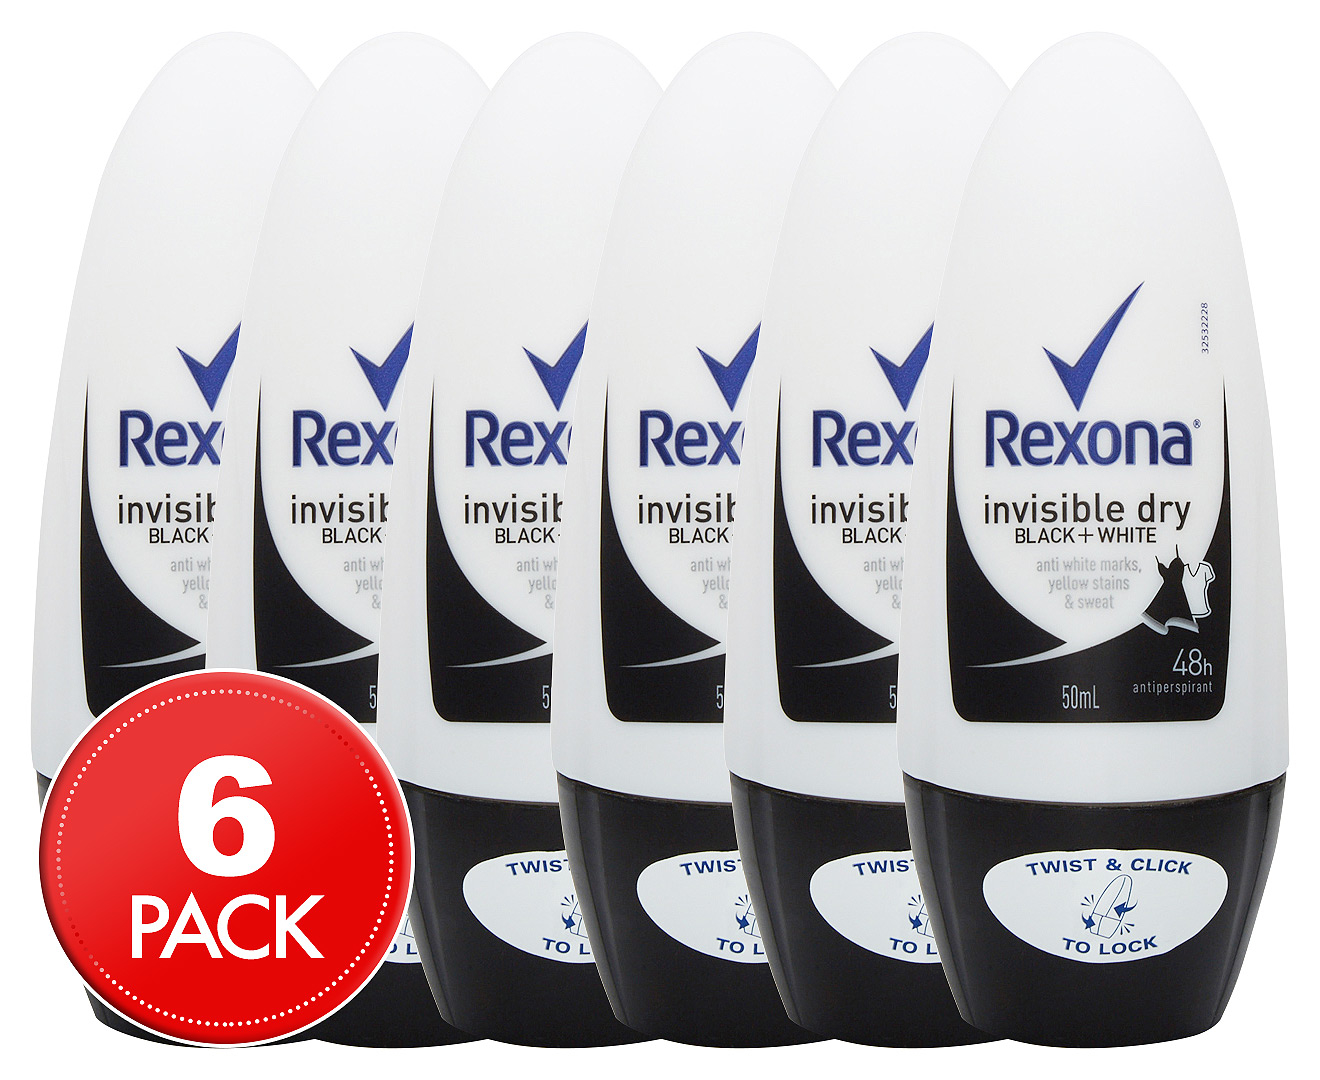 6 x Rexona Invisible Dry Black+White Roll-On Deodorant 50mL